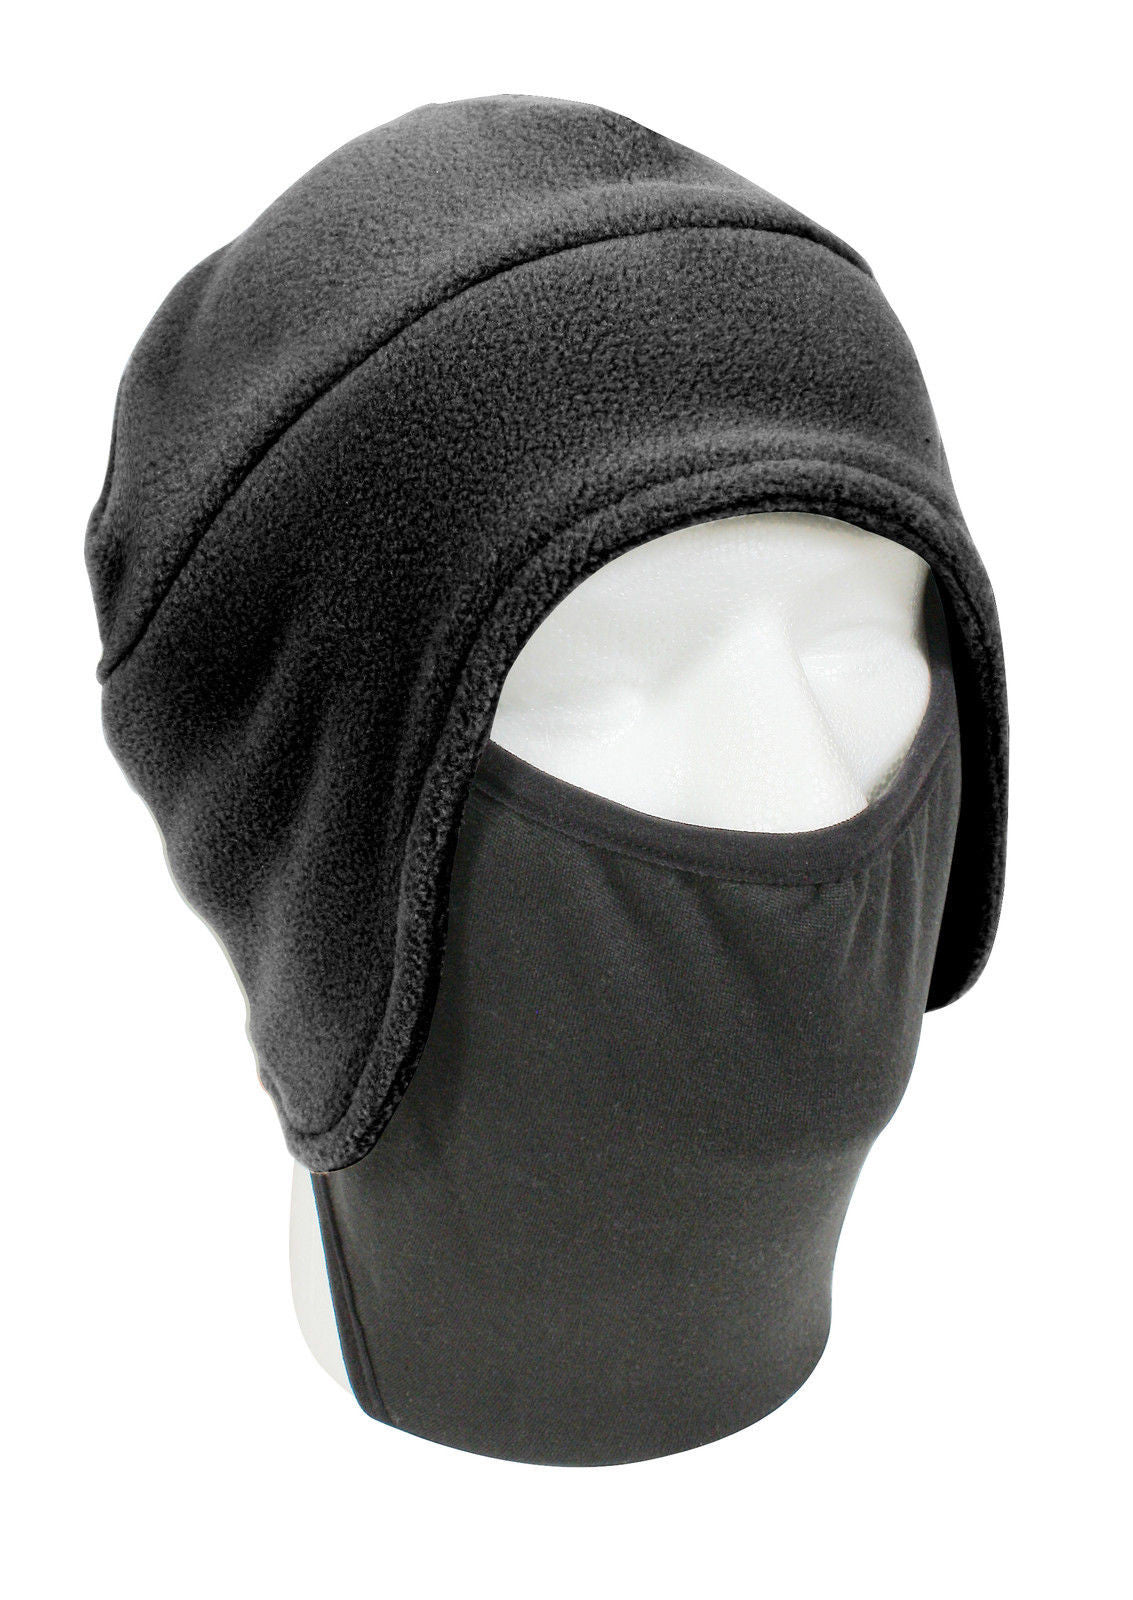 Convertible Winter Cap Hat w/ Facemask Black Fleece Cold Head & Face M ...